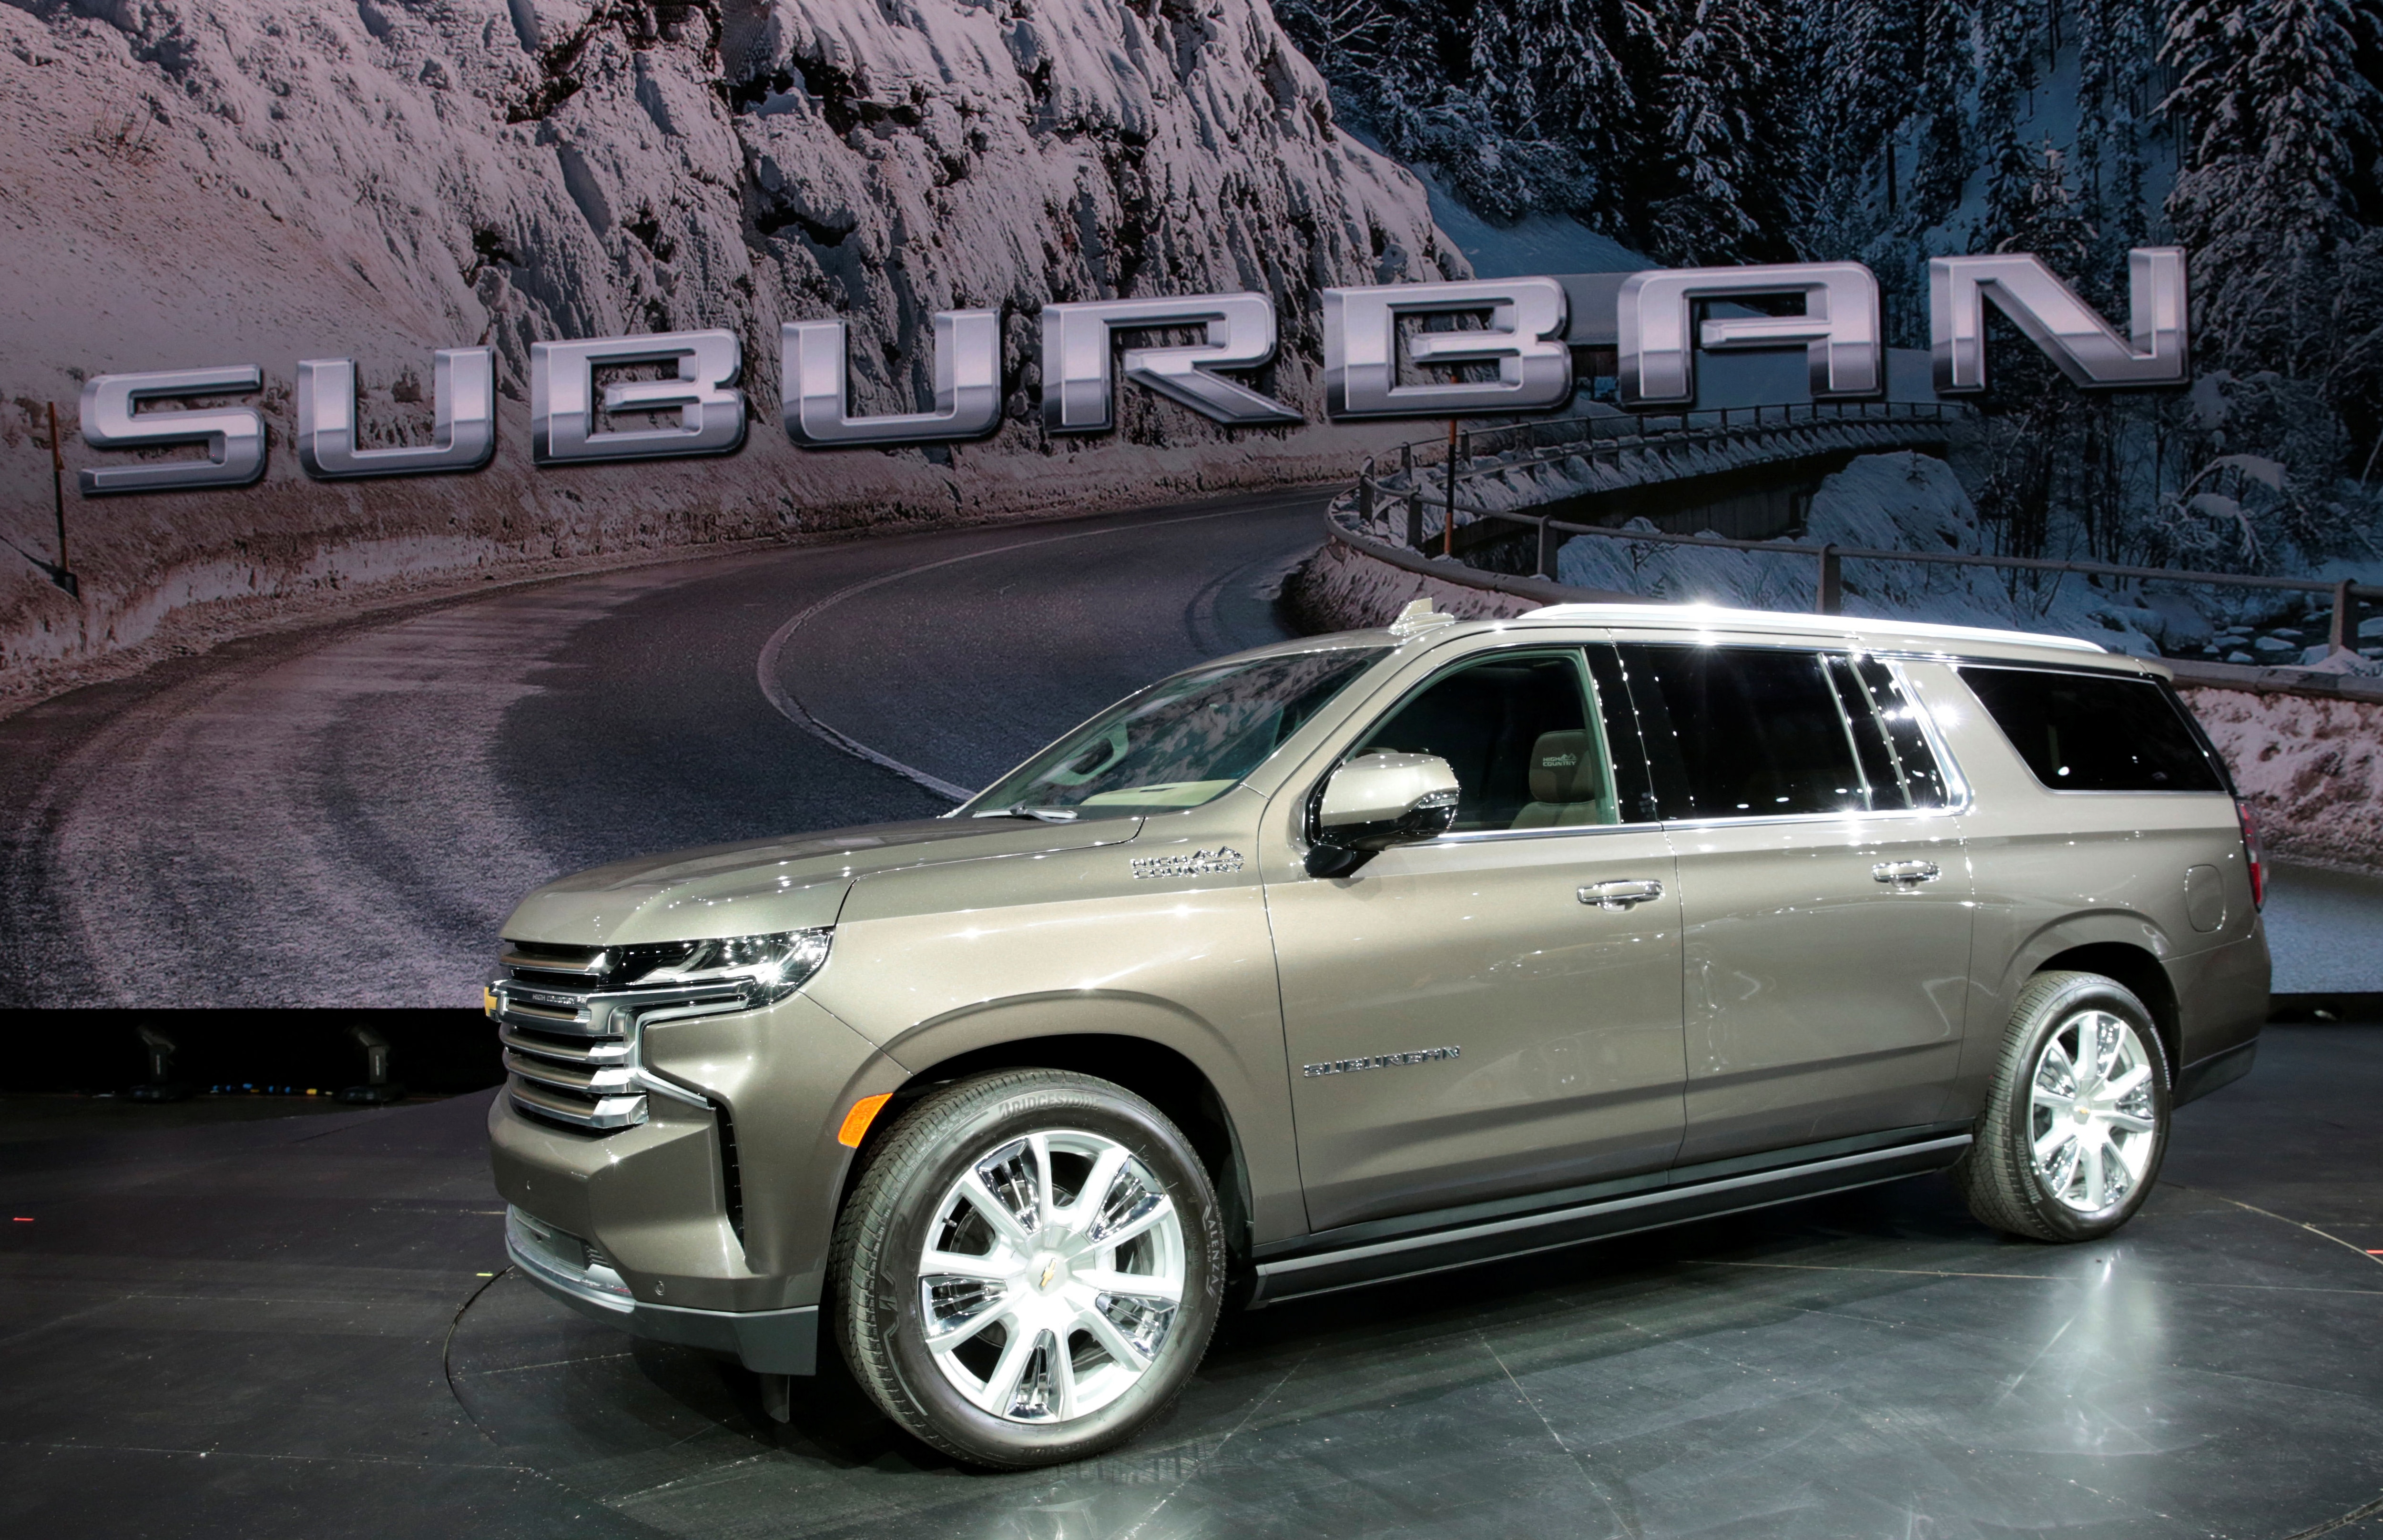 Chevrolet unveils the 2021 Suburban SUV